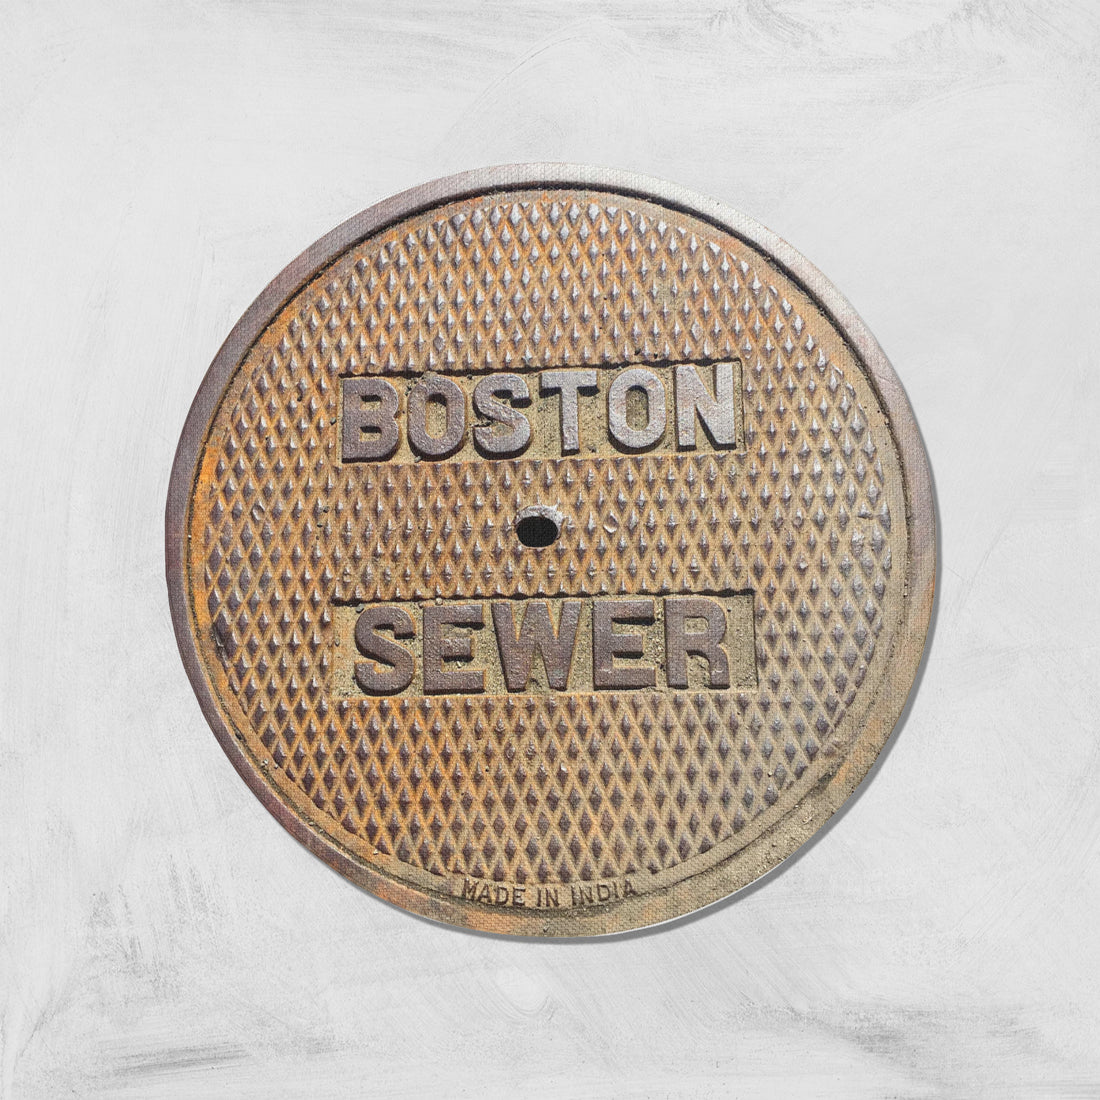 EAST SERIES - Sewer Cover Doormat, Trivet, Coaster - Boston, MA